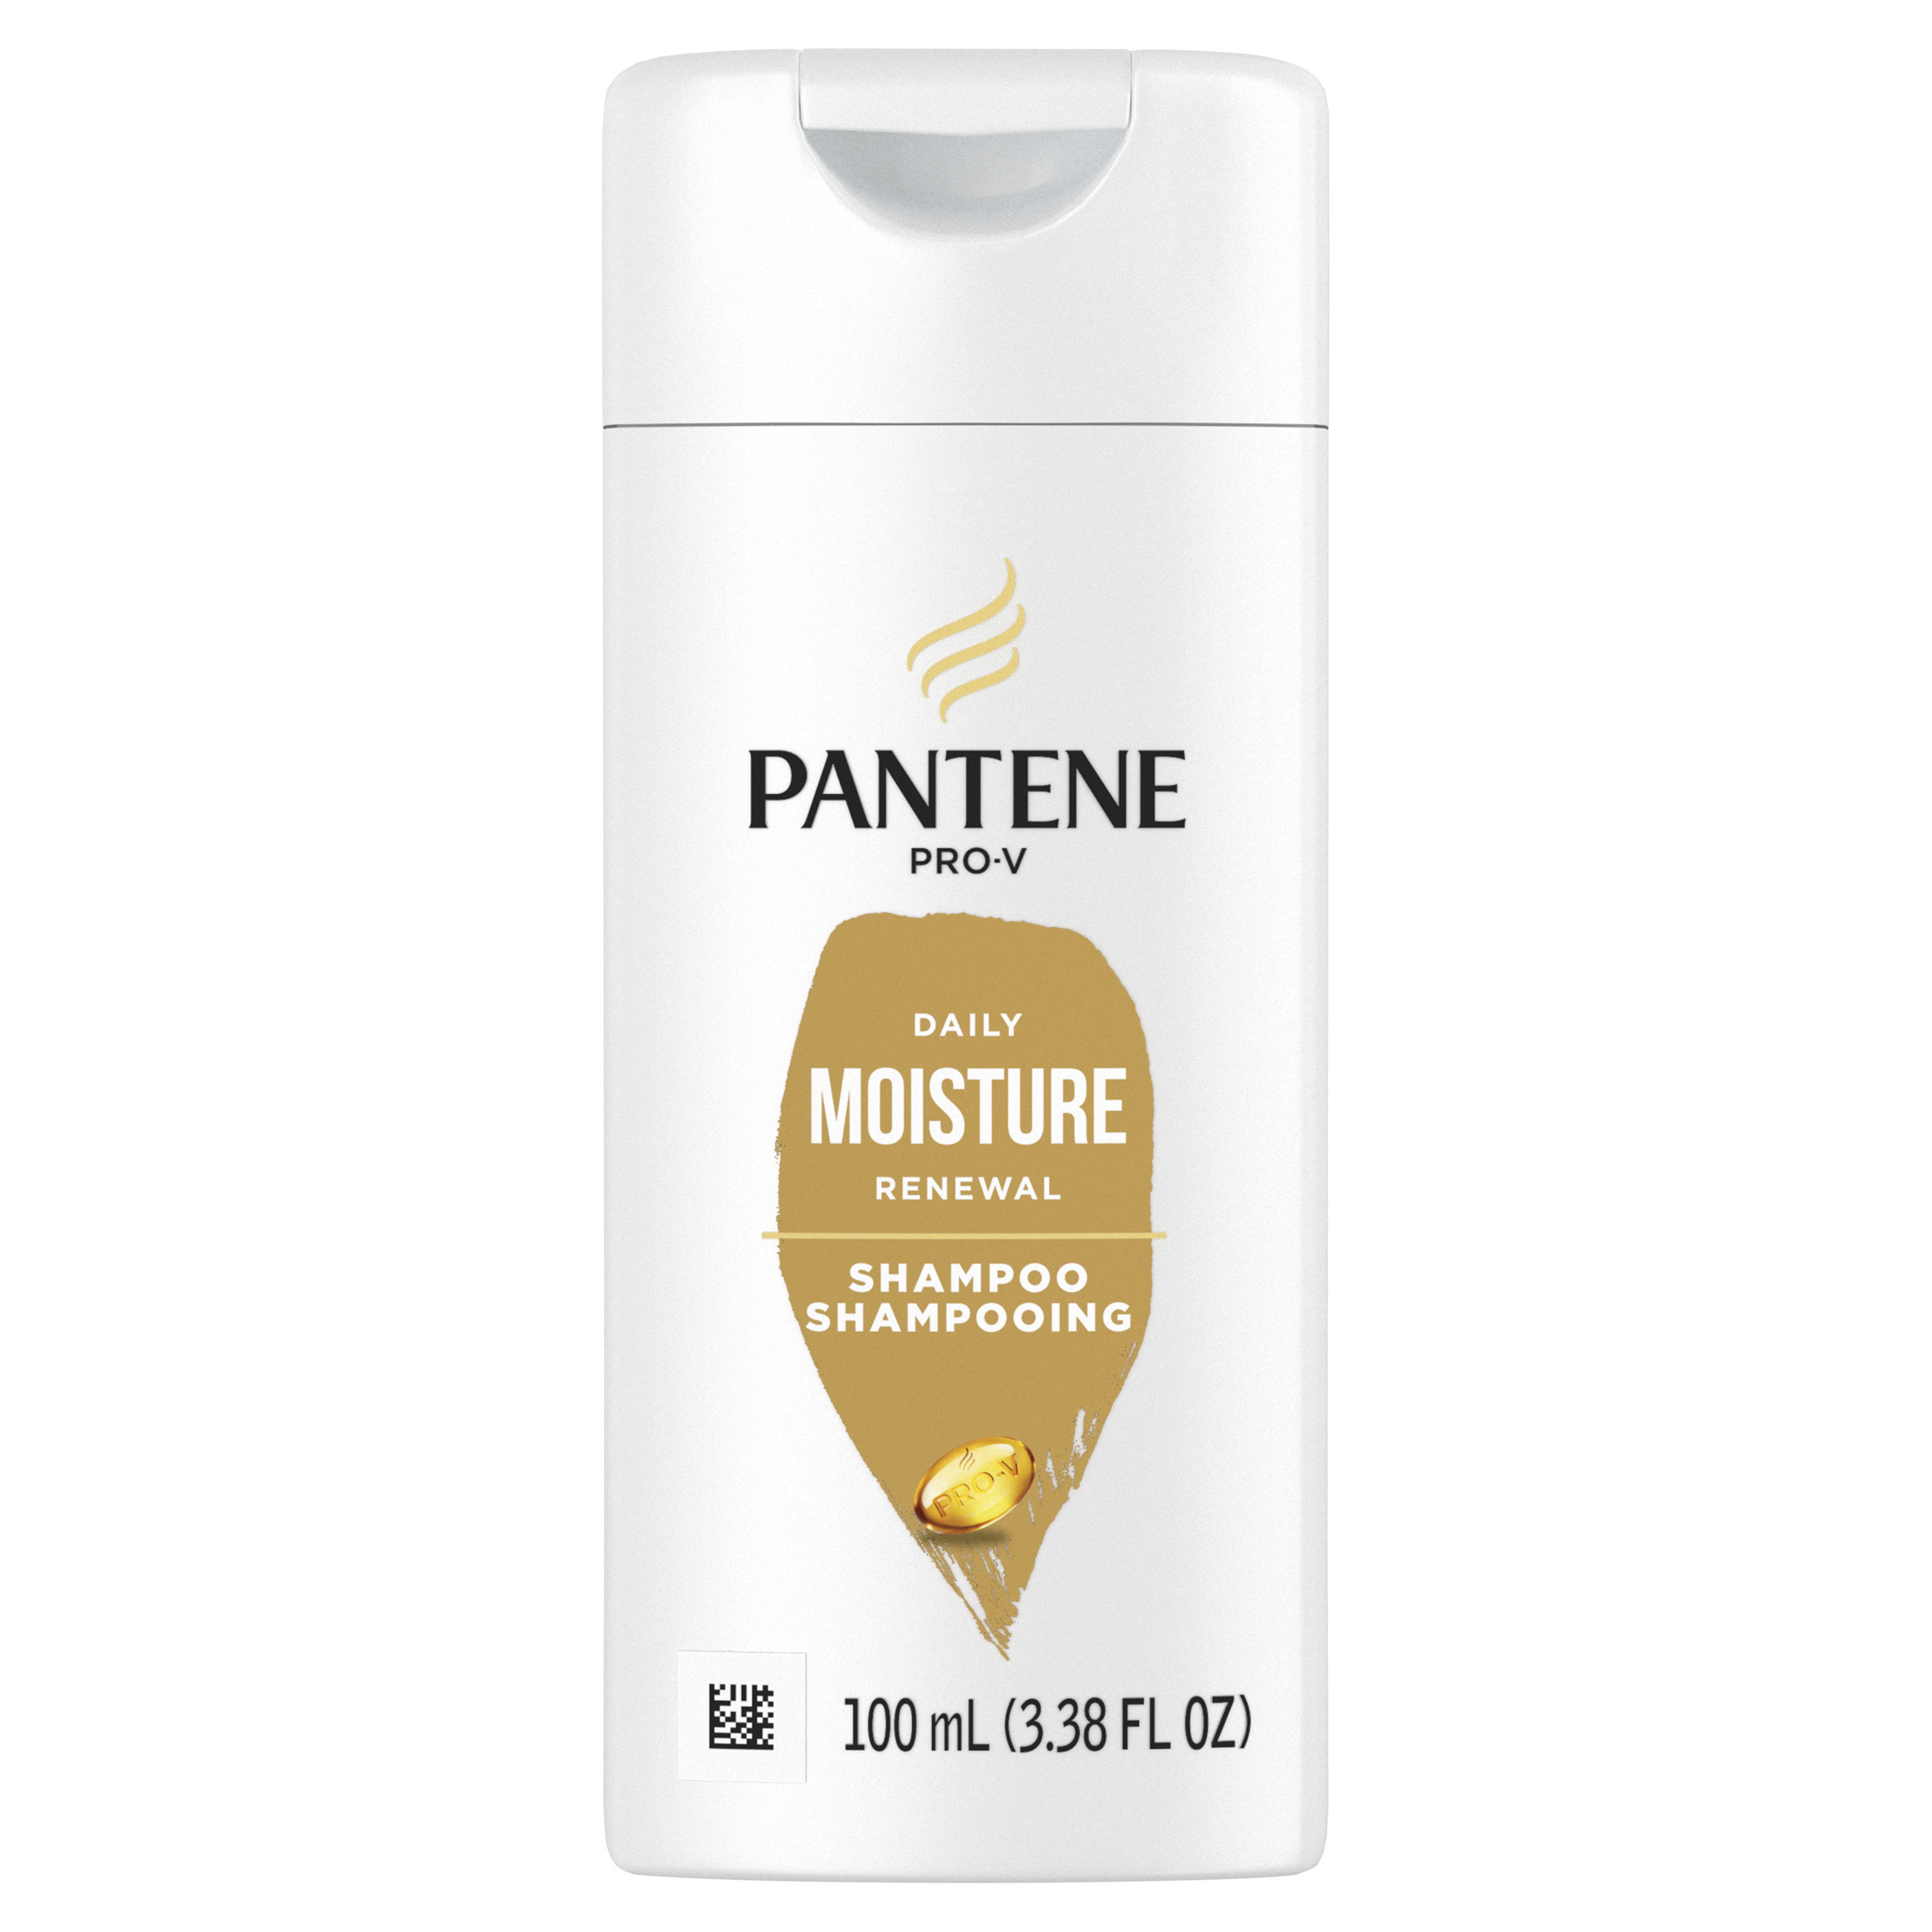 Pantene Pro-V Daily Moisture Renewal Shampoo, 3.38 fl oz - image 3 of 10